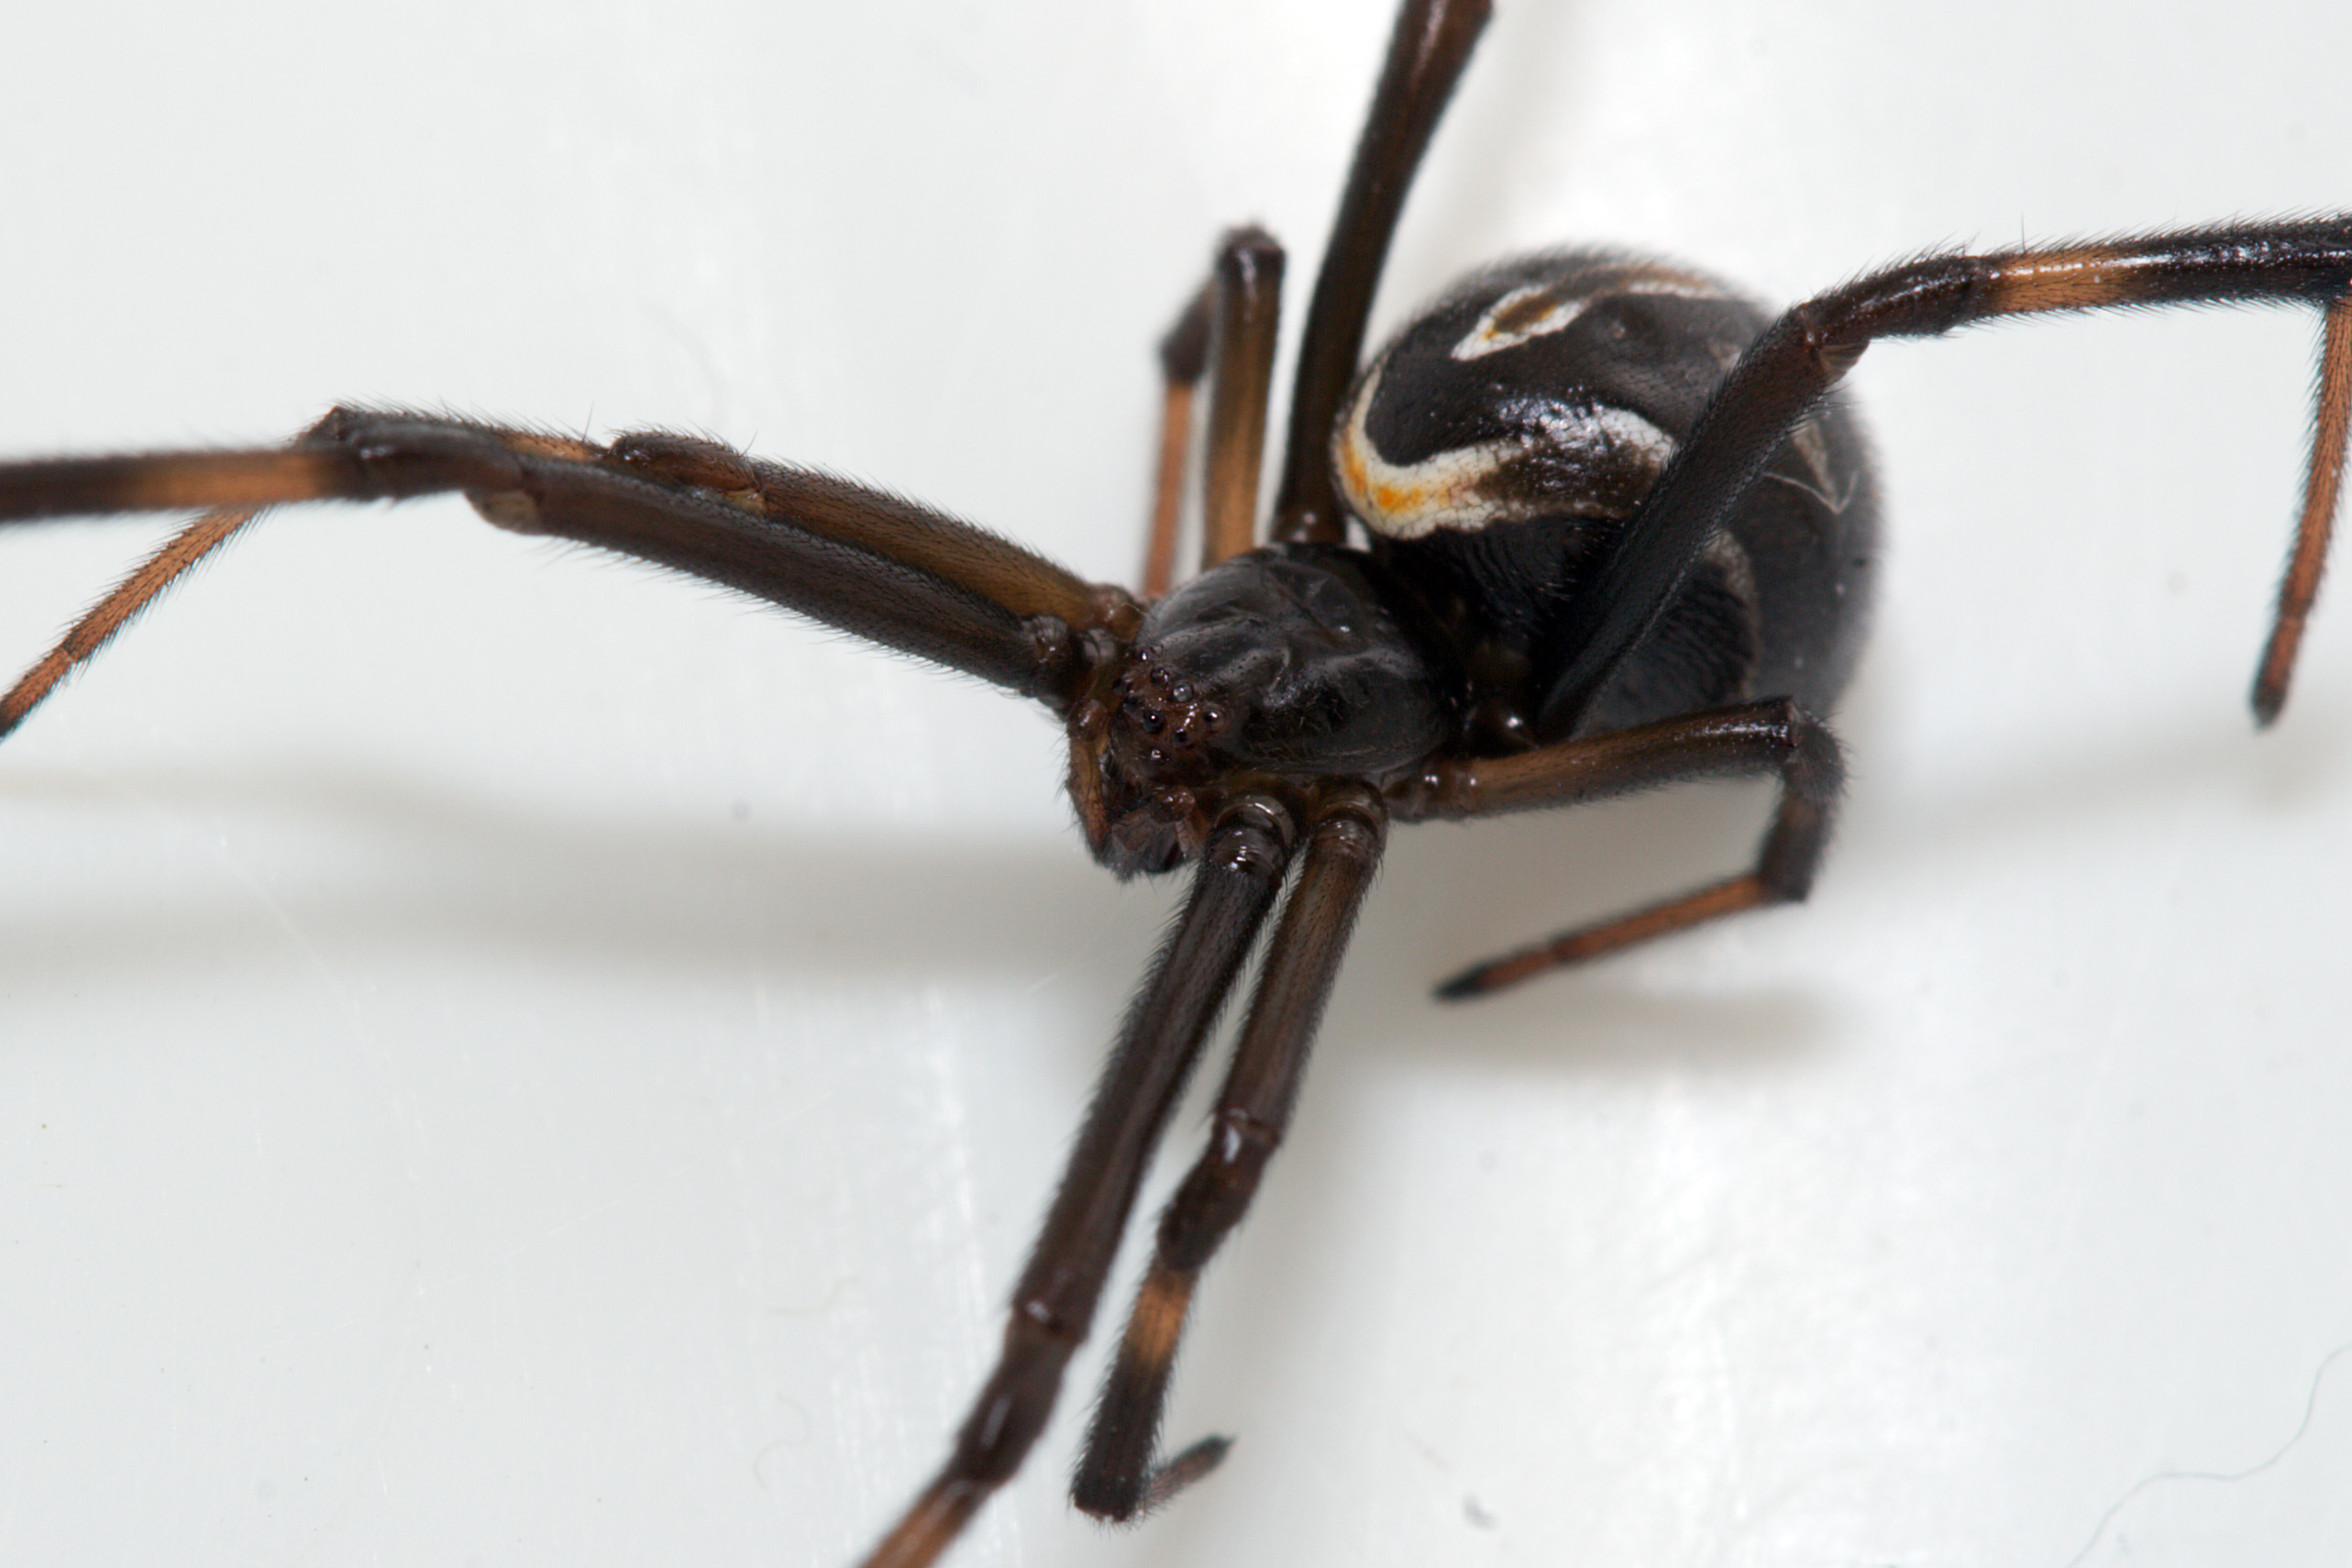 File:Latrodectus hesperus black widow spider immature female.jpg ...